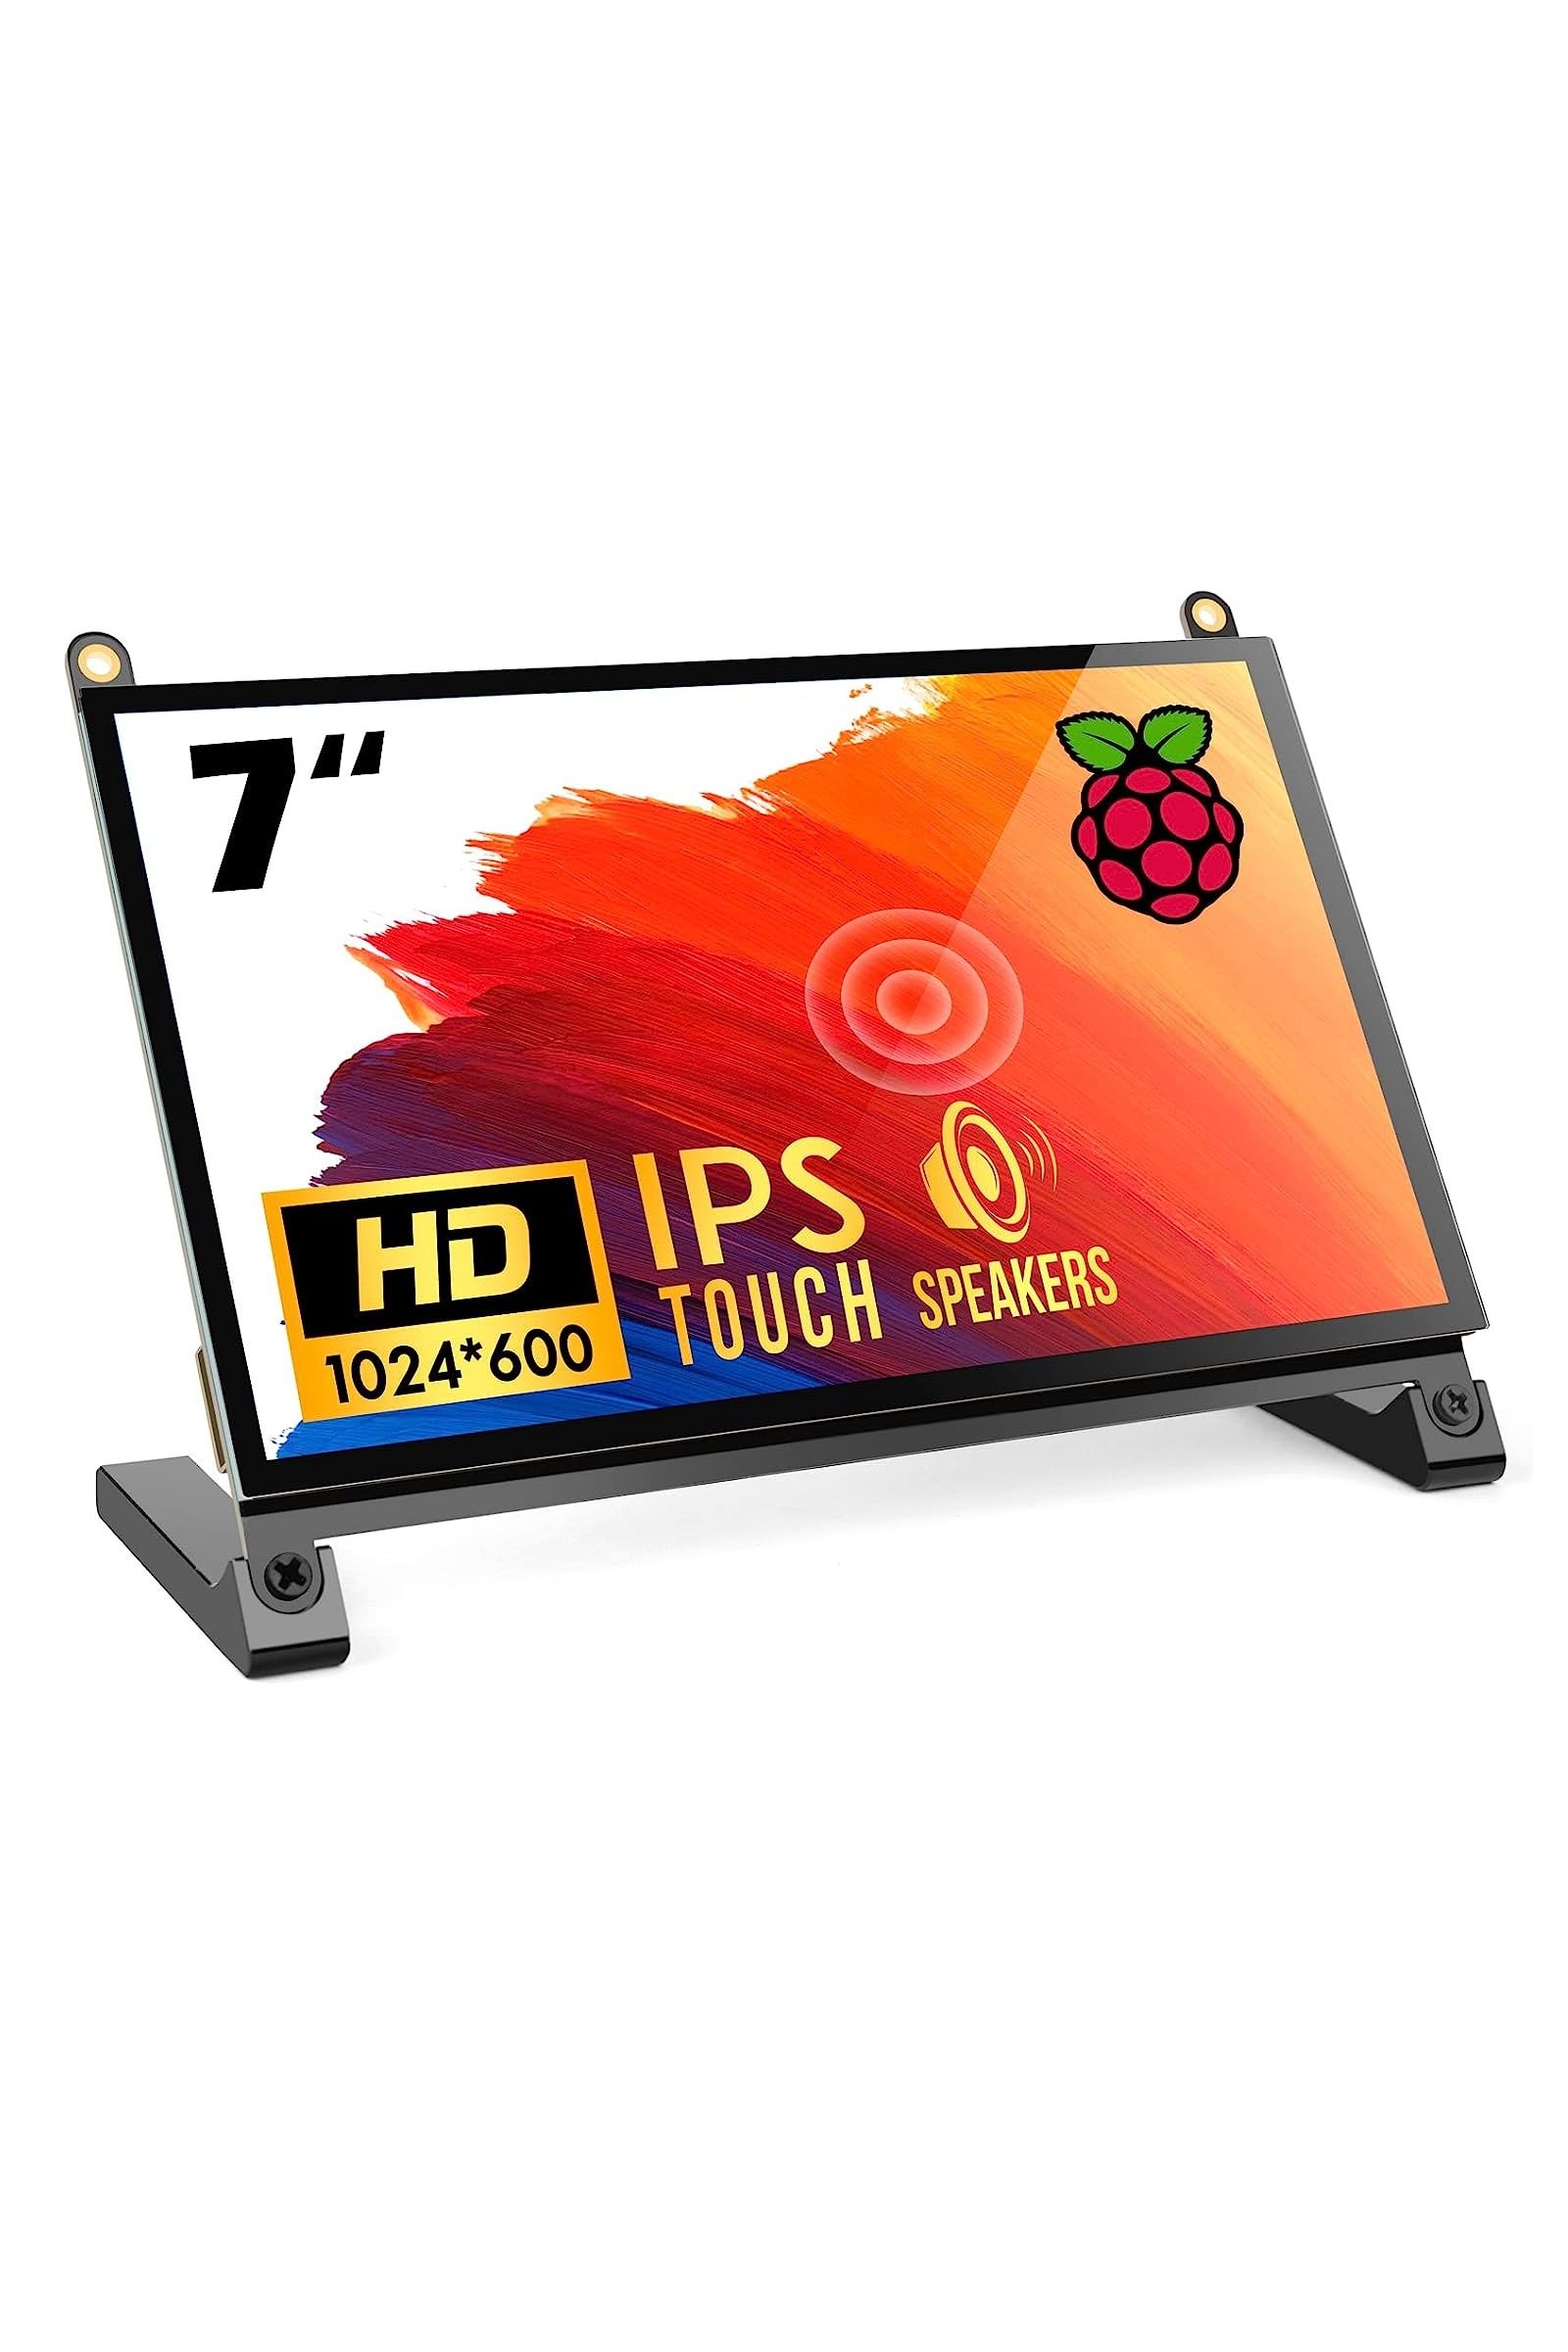 ROADOM Raspberry Pi 600p Touchscreen Monitor